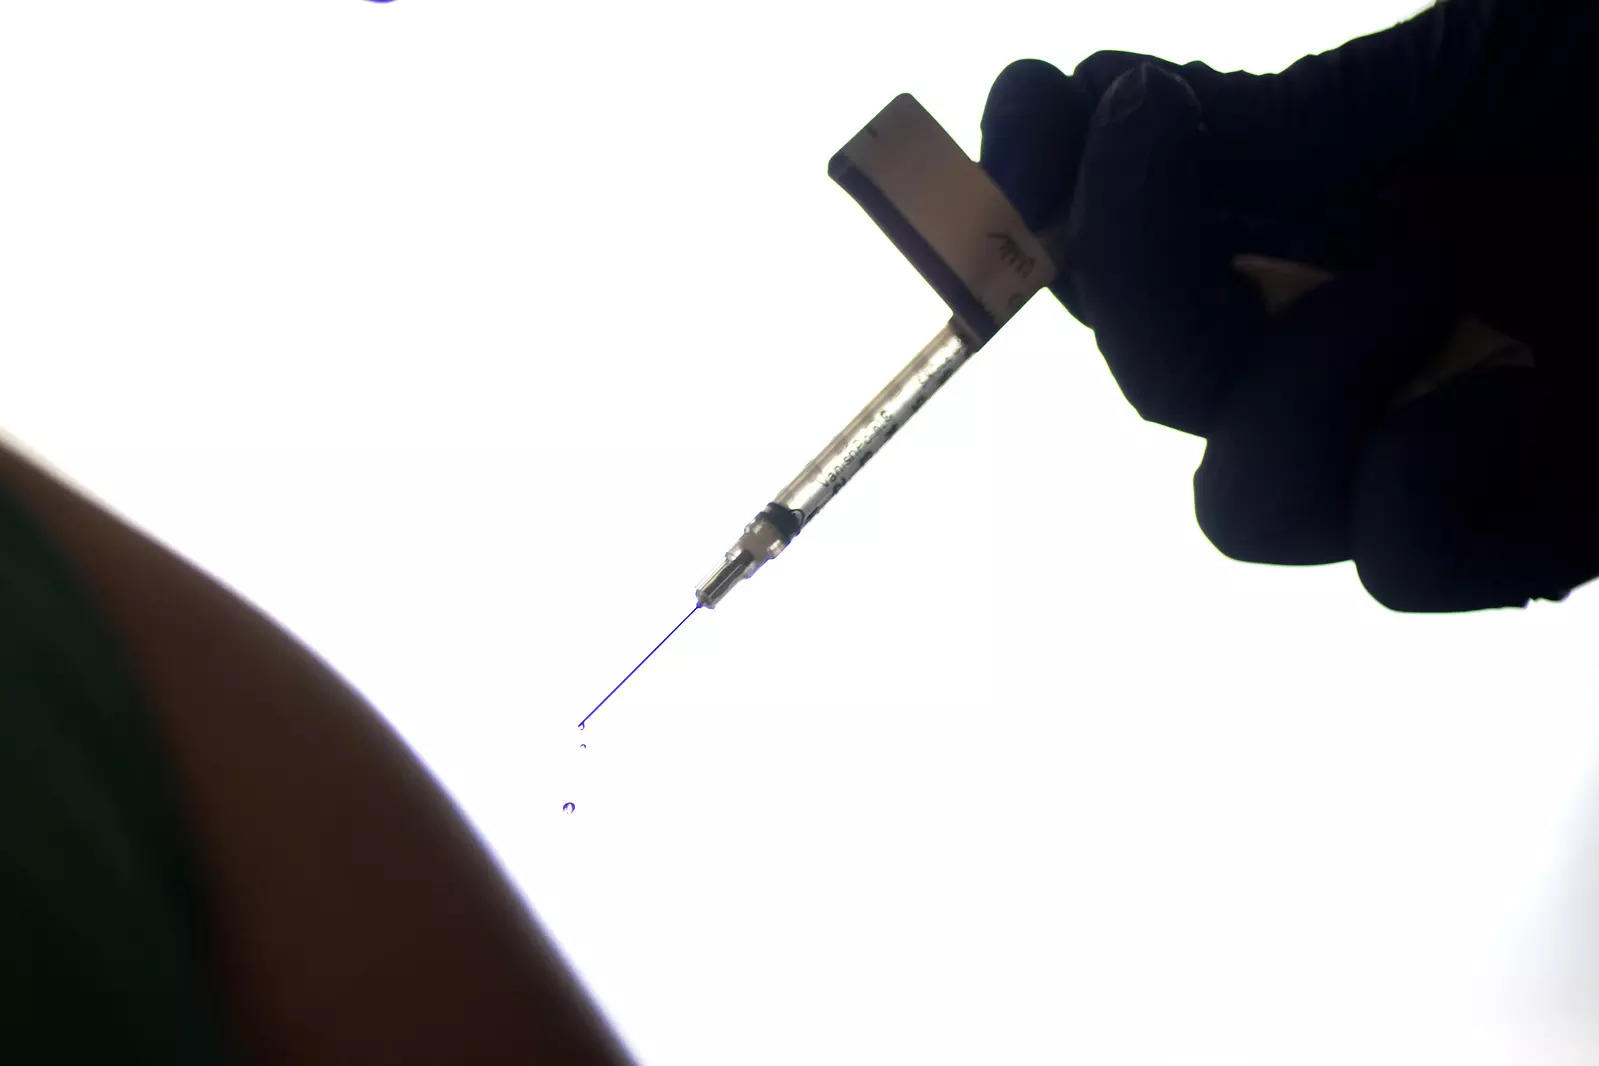 U.S. administers over 7,300 Novavax vaccine doses - CDC